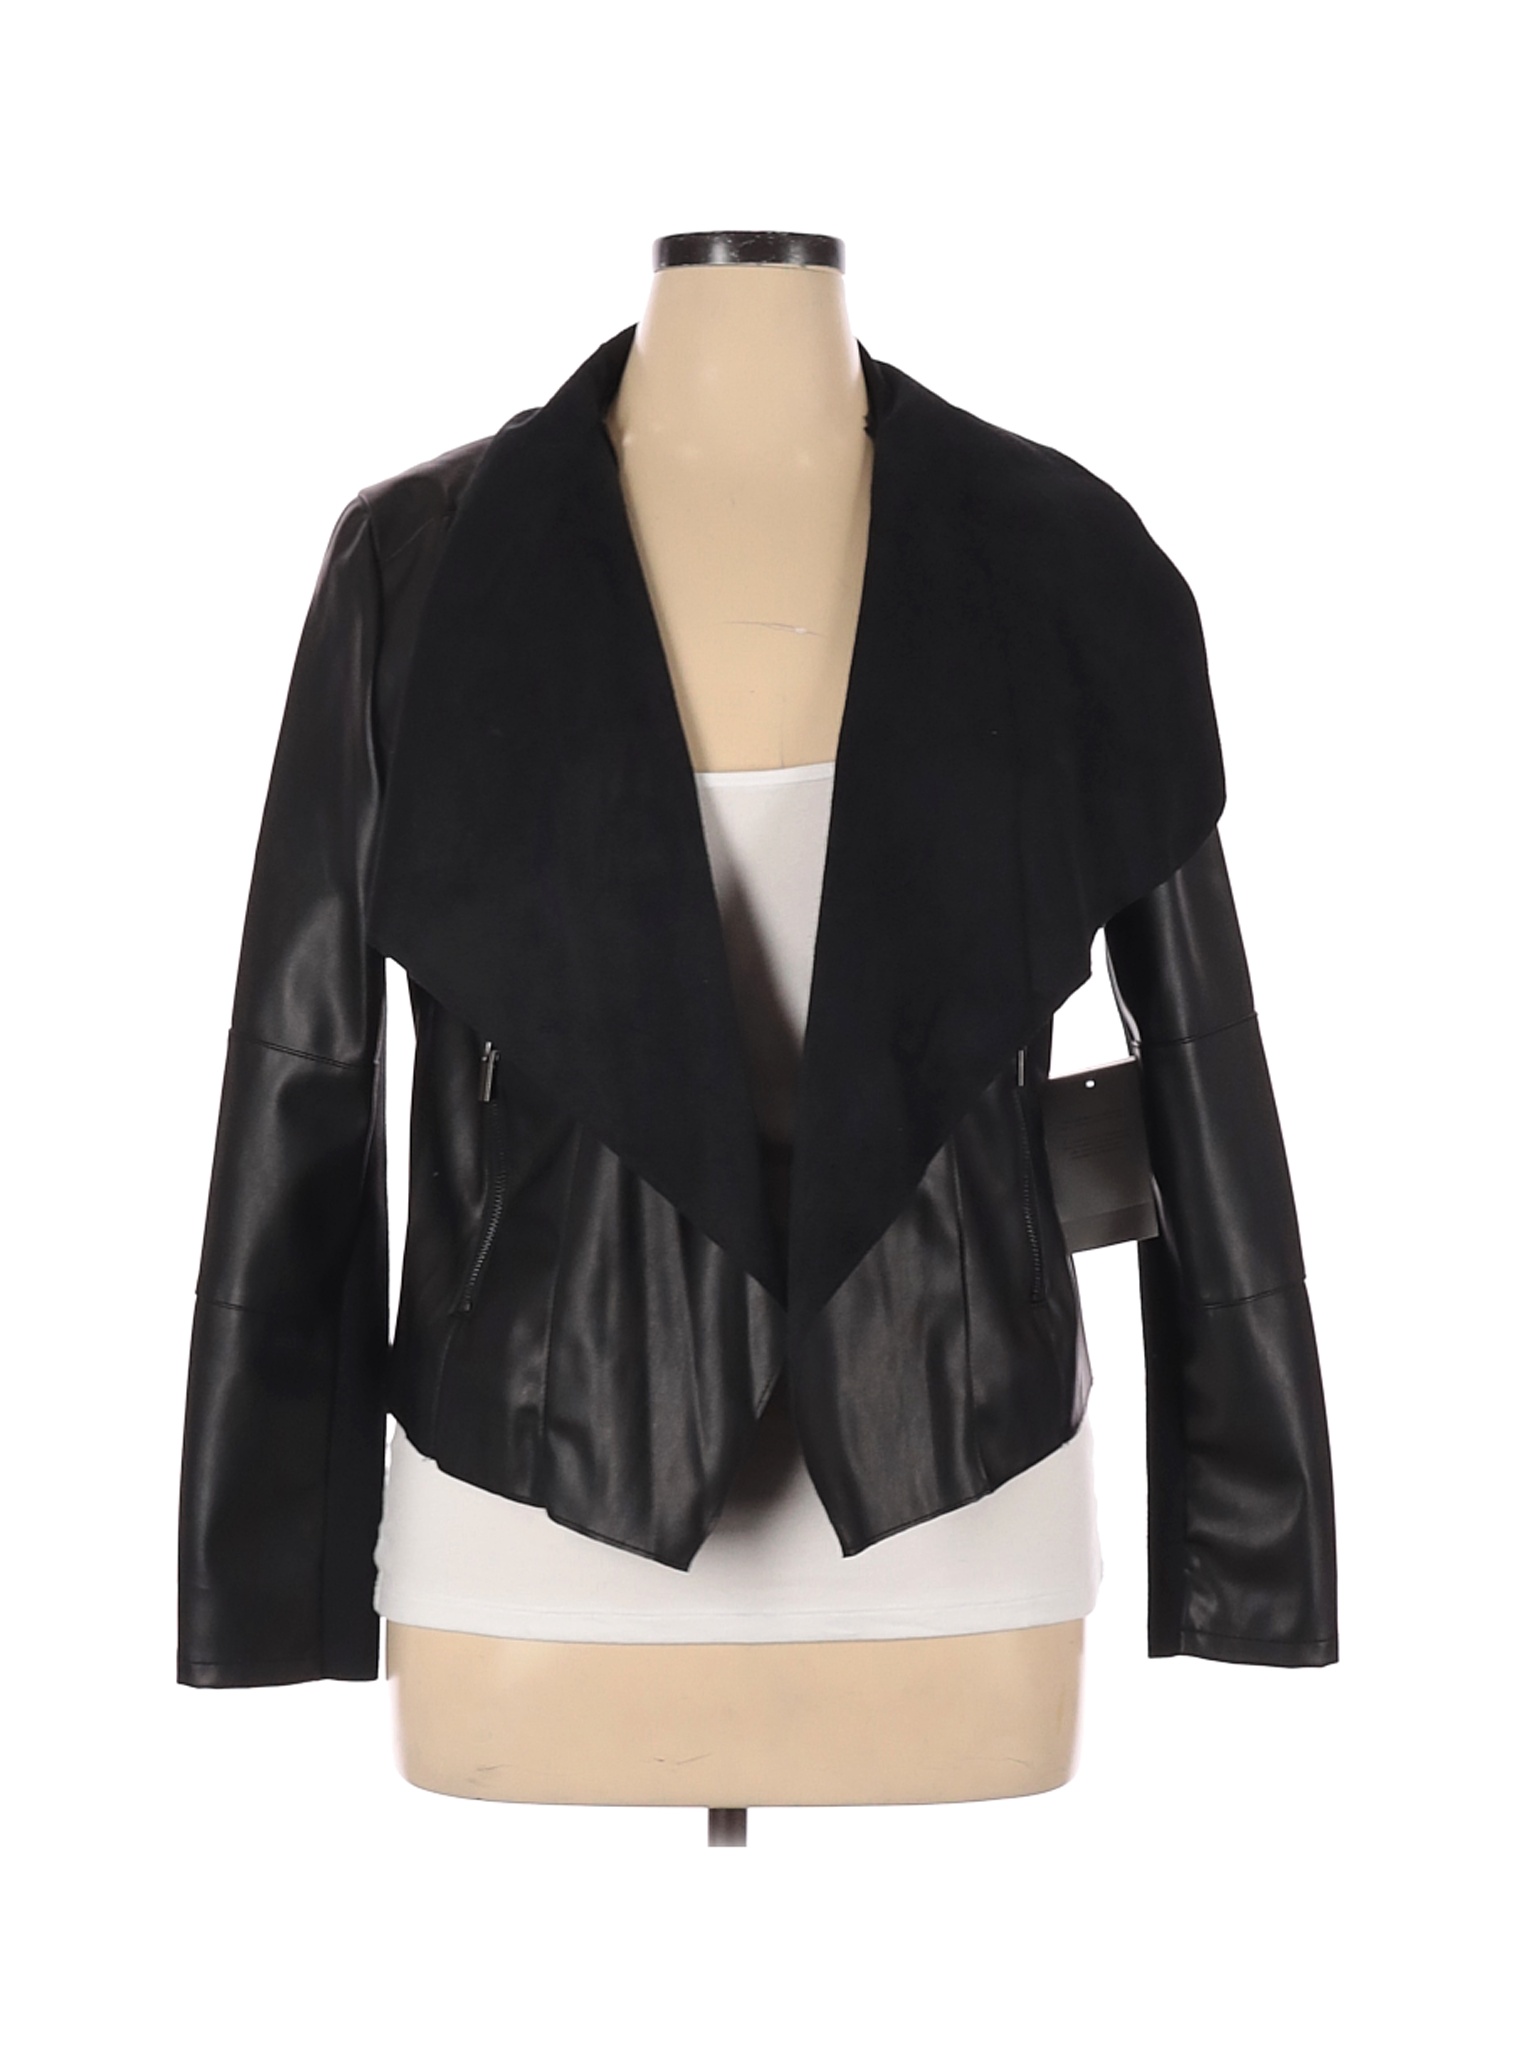 NWT Bagatelle Women Black Faux Leather Jacket XL | eBay